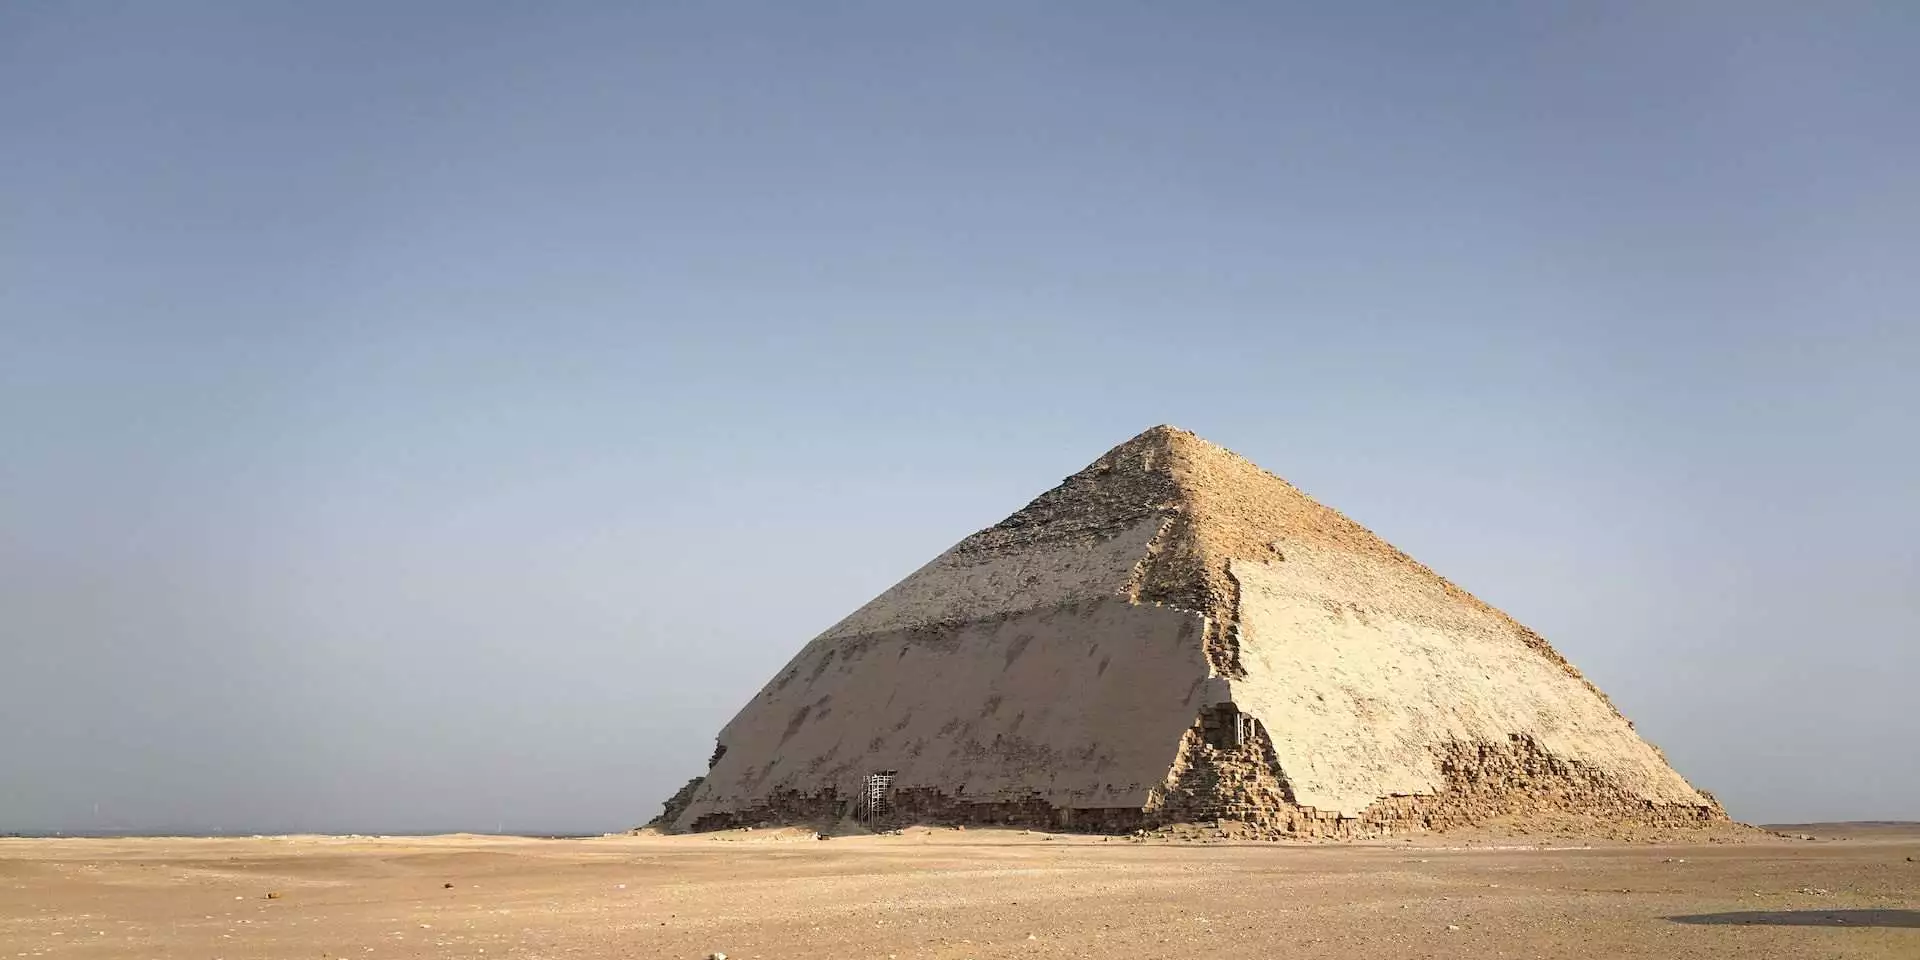 The bent pyramid